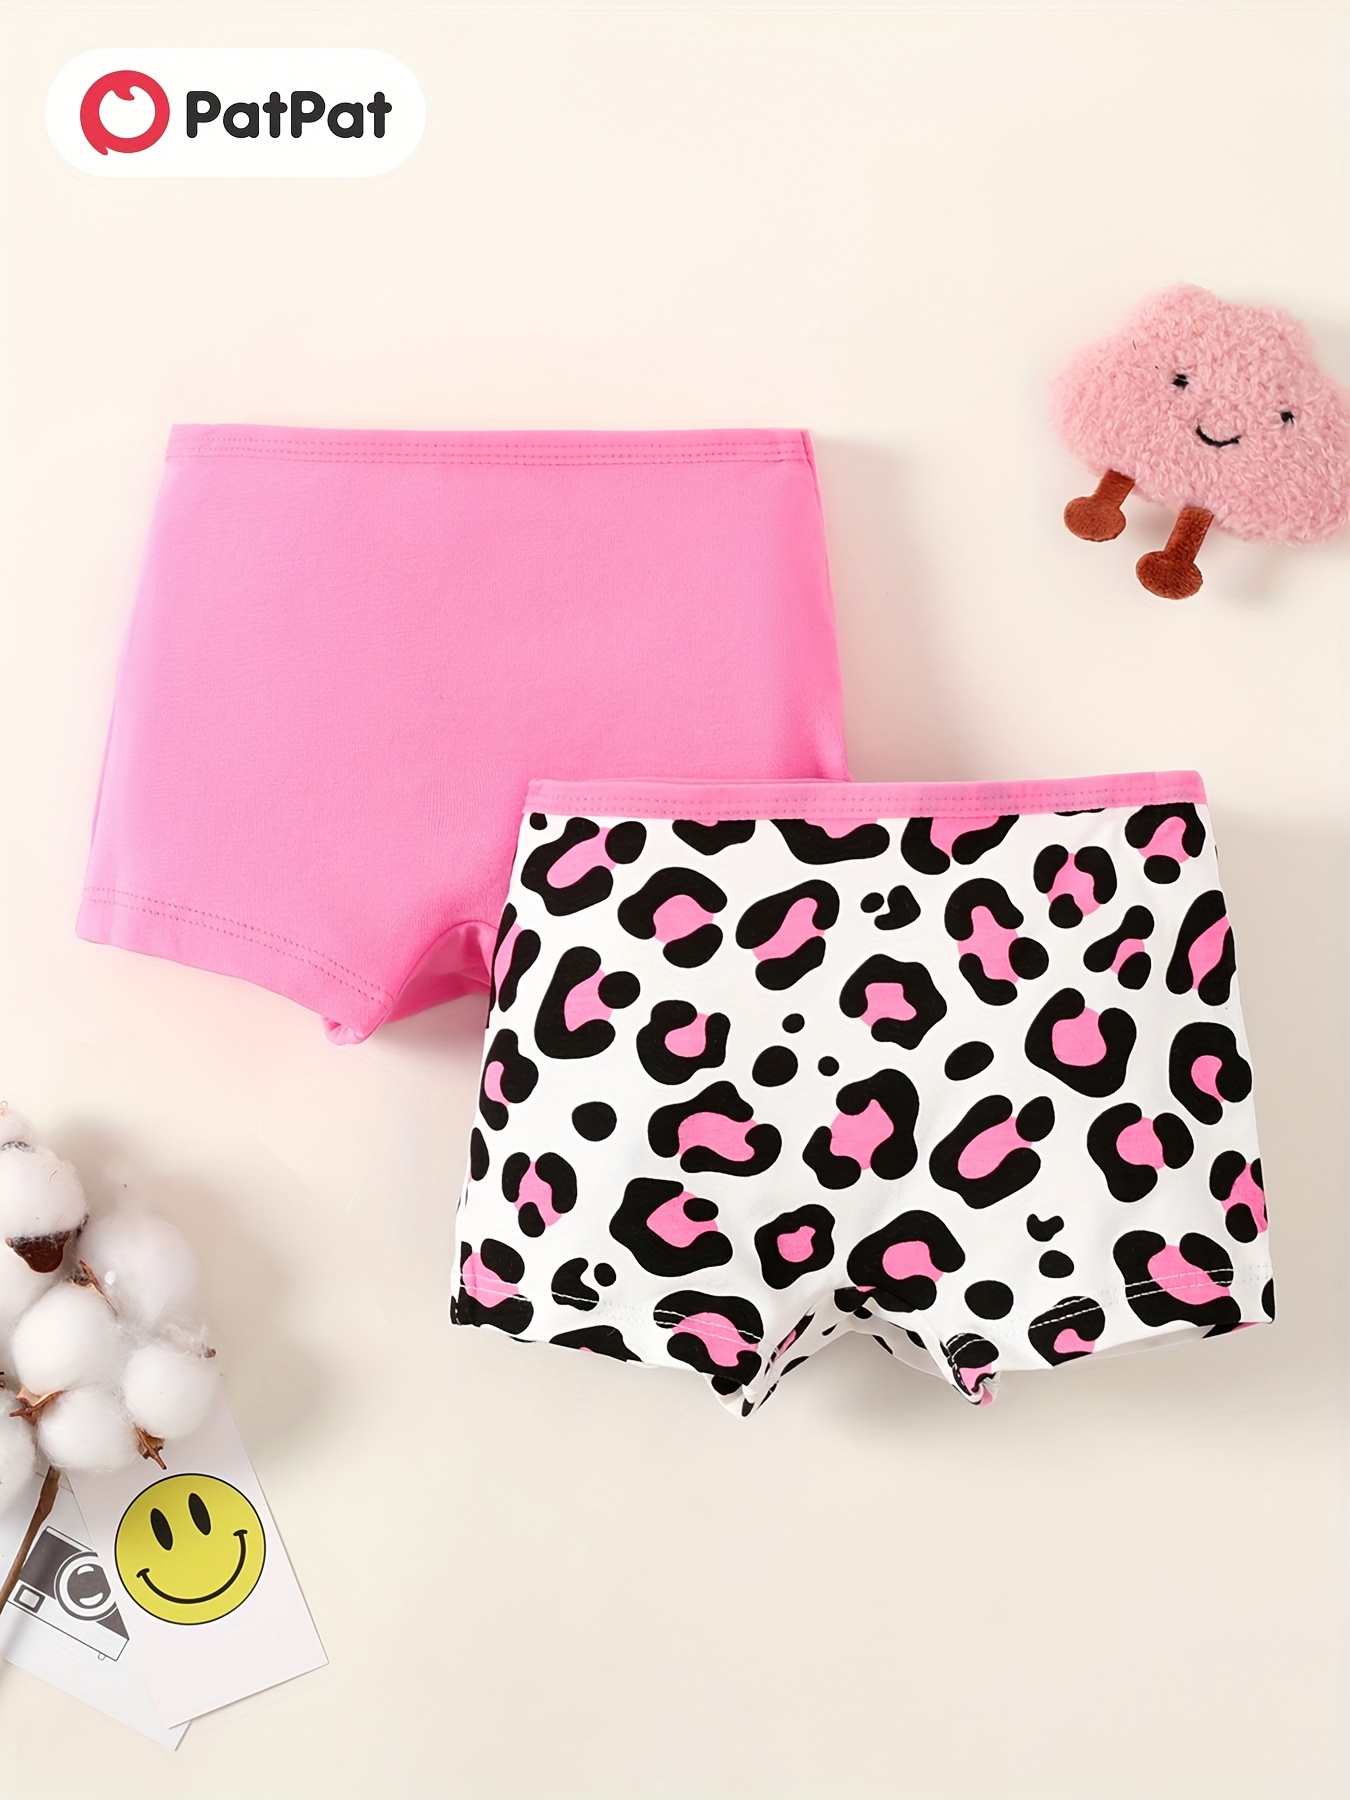 Boy Short Panties Pink Leopard